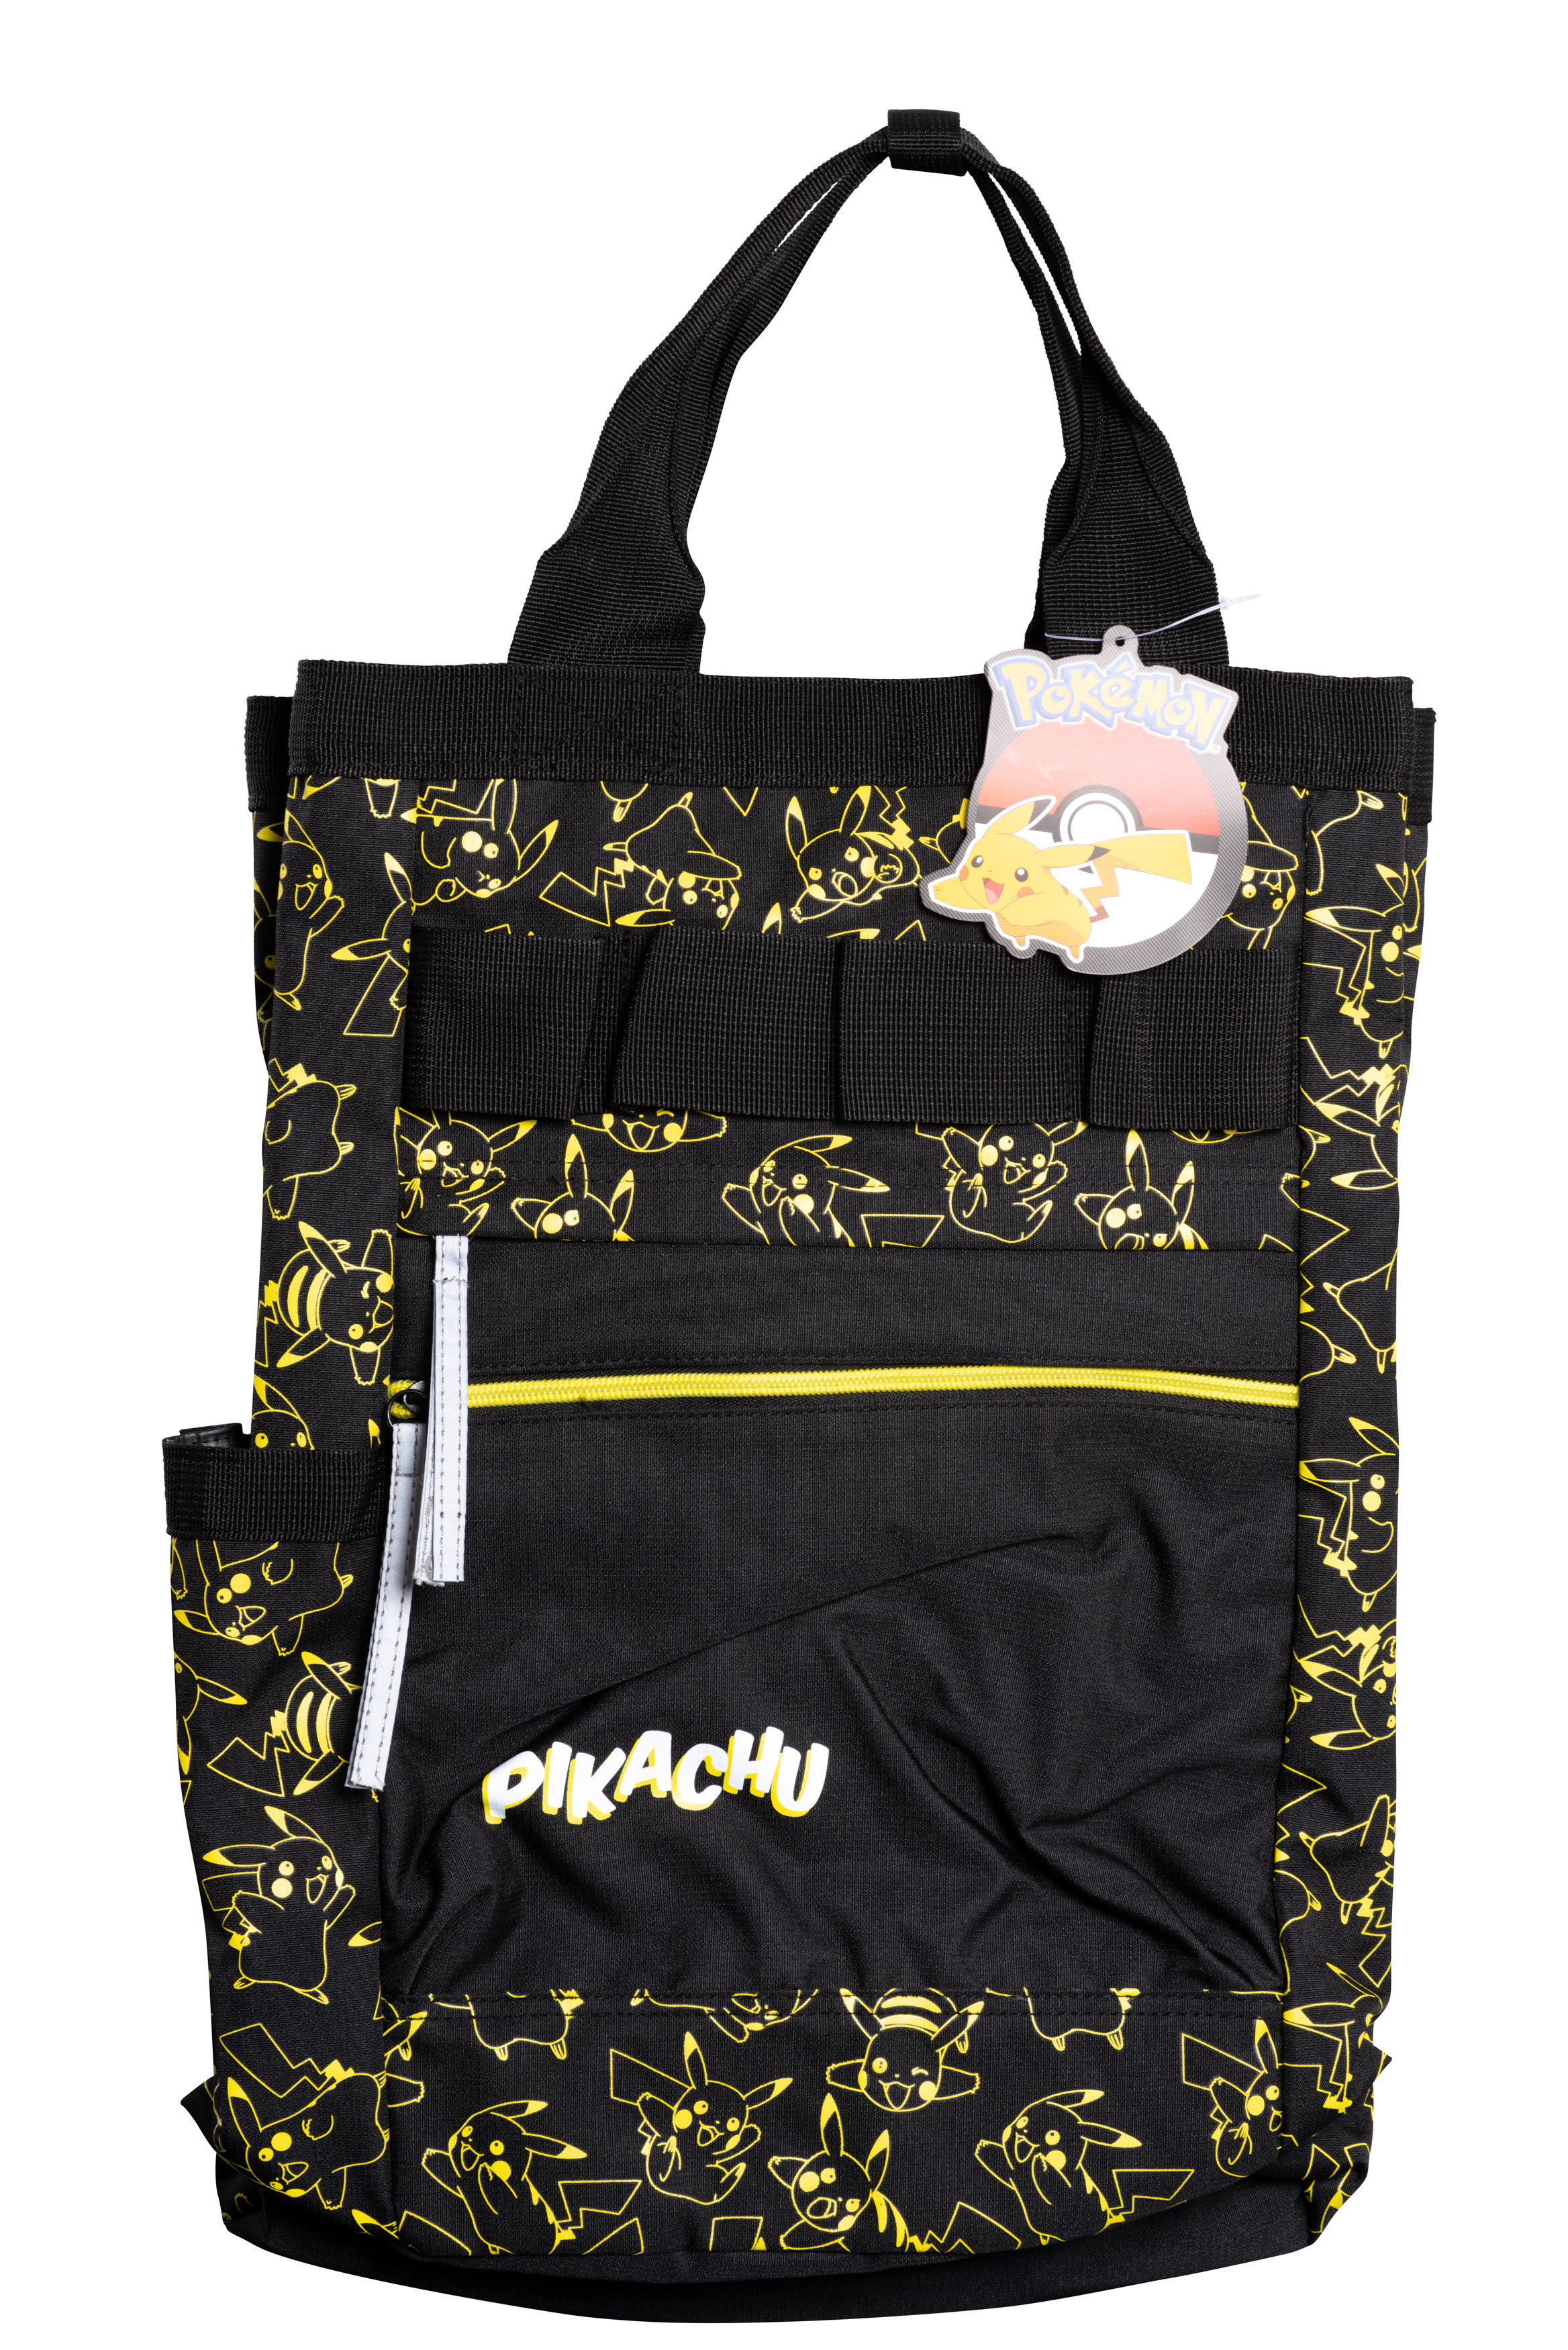 Rucksack Pikachu Pokémon - - schwarz